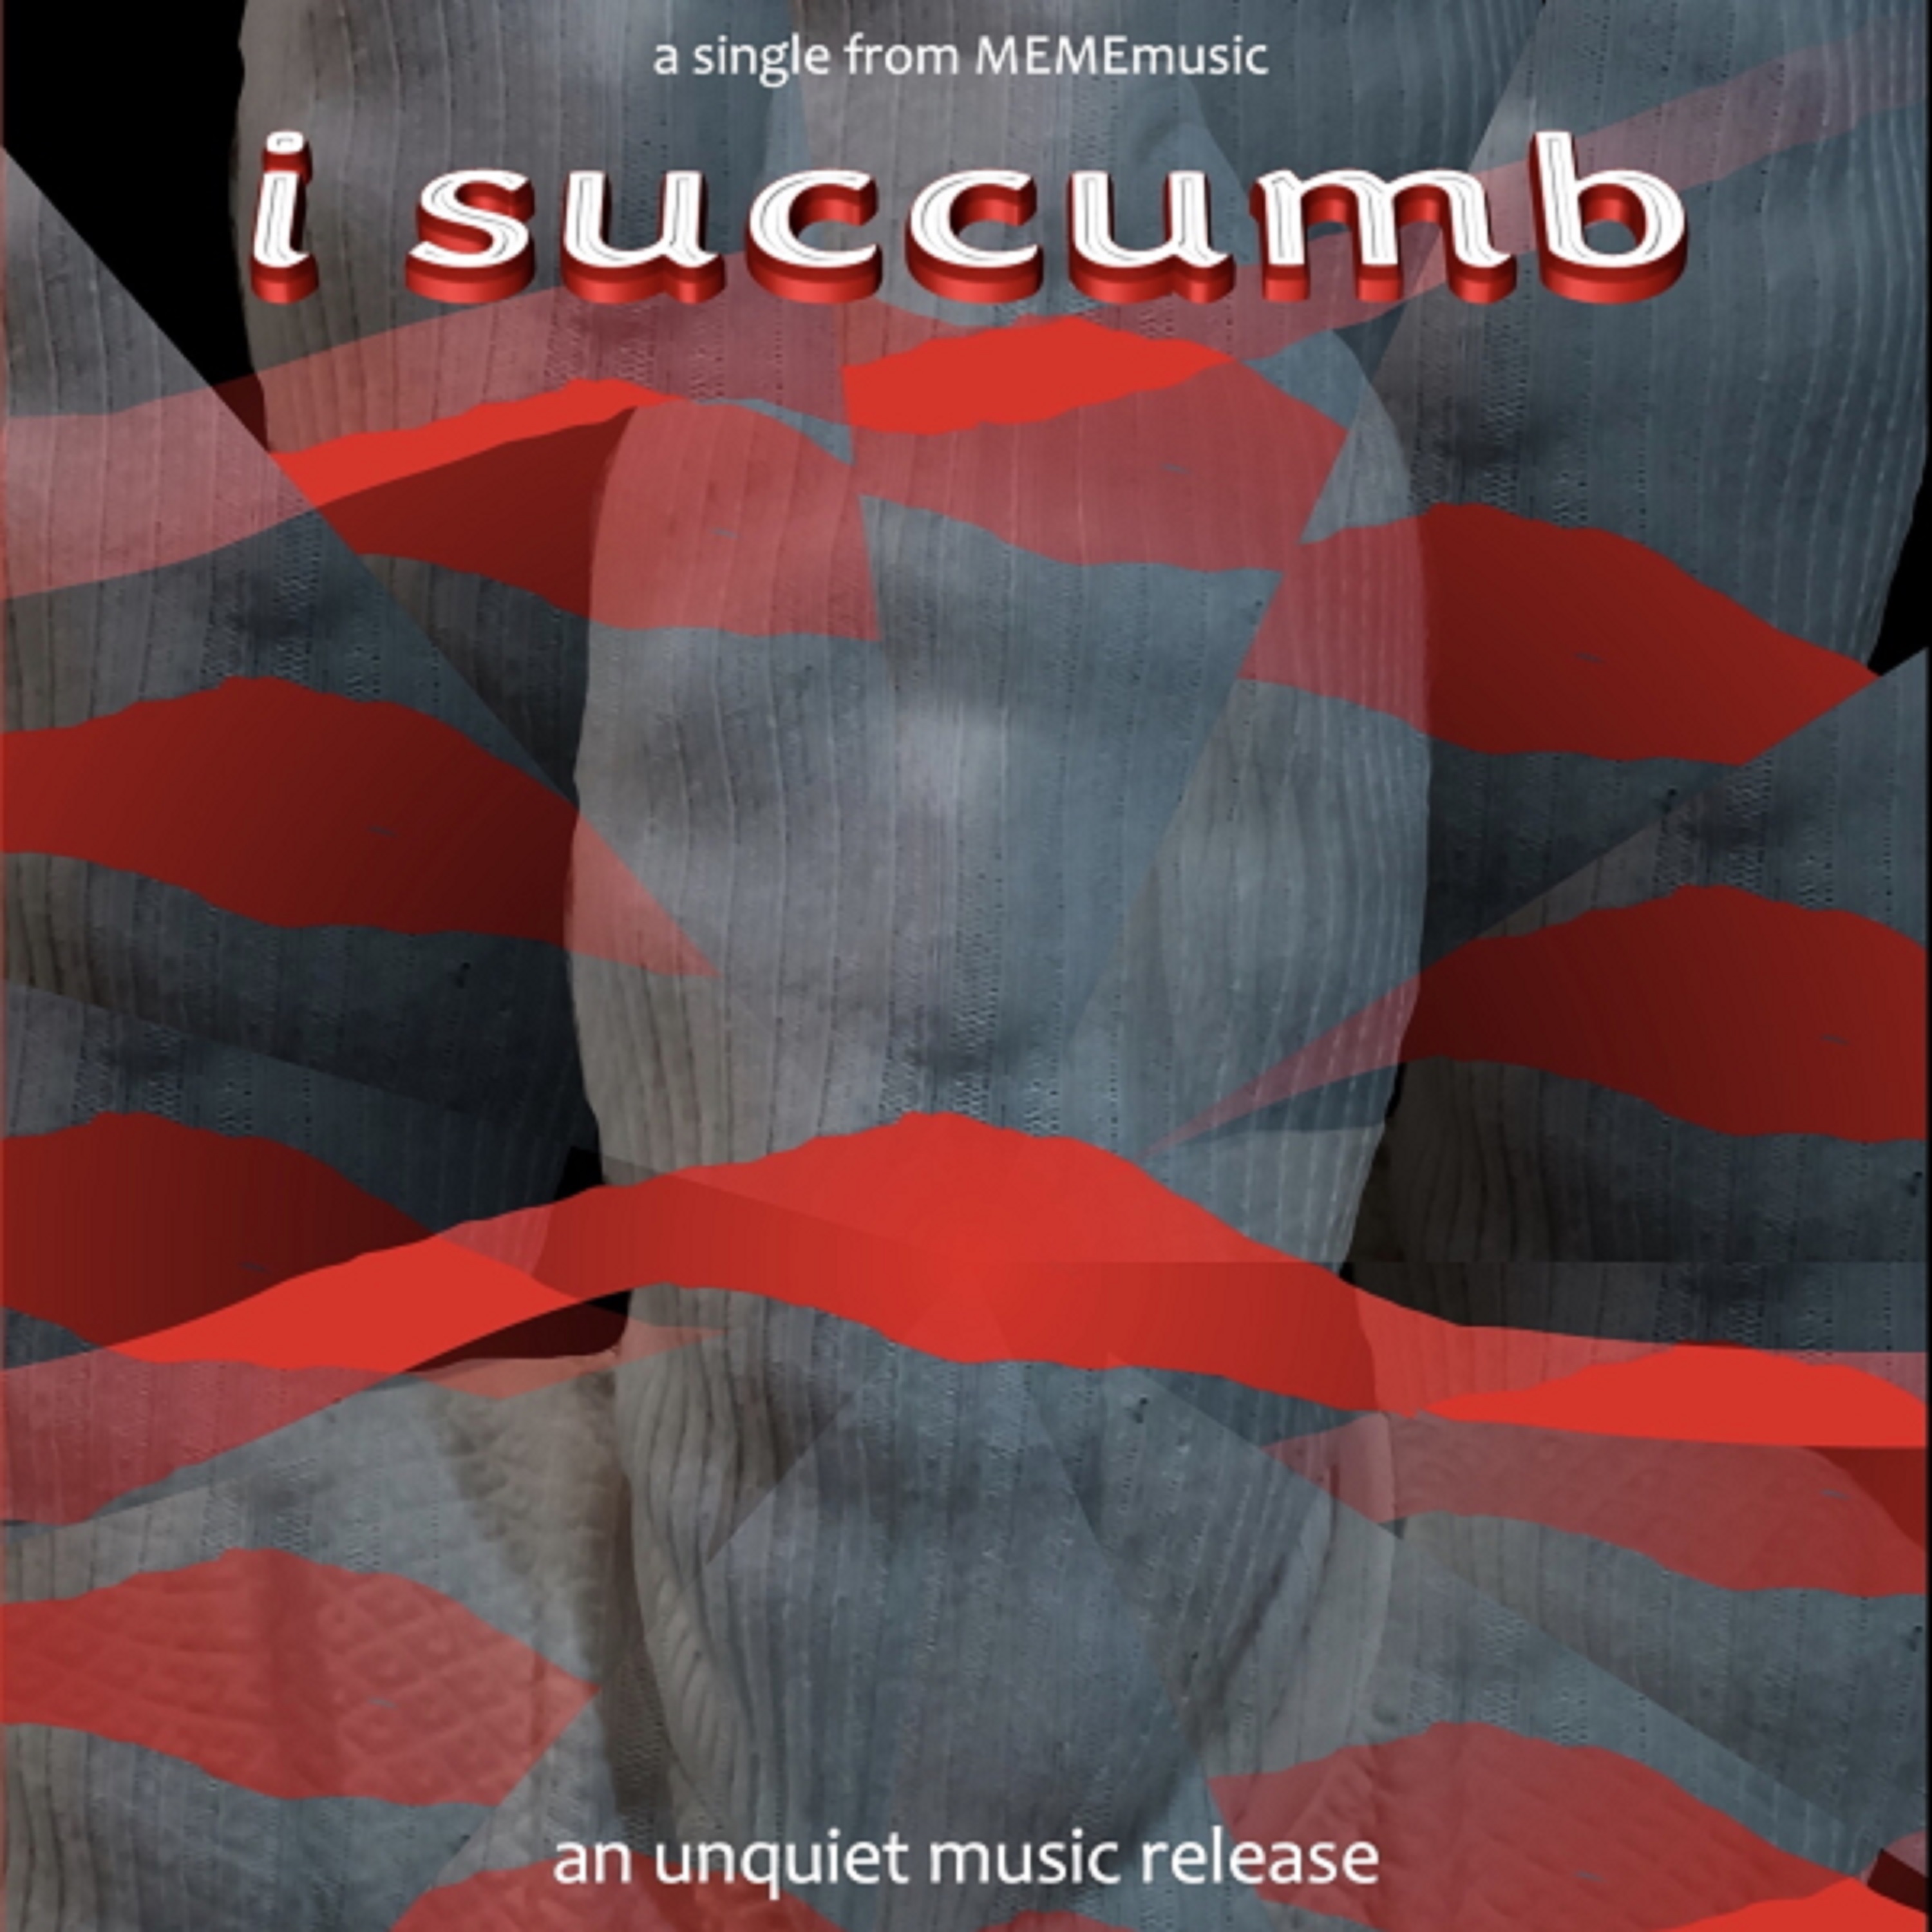 UNQUIET MUSIC LTD To Release New Single “I Succumb” Feat. Members of King Crimson